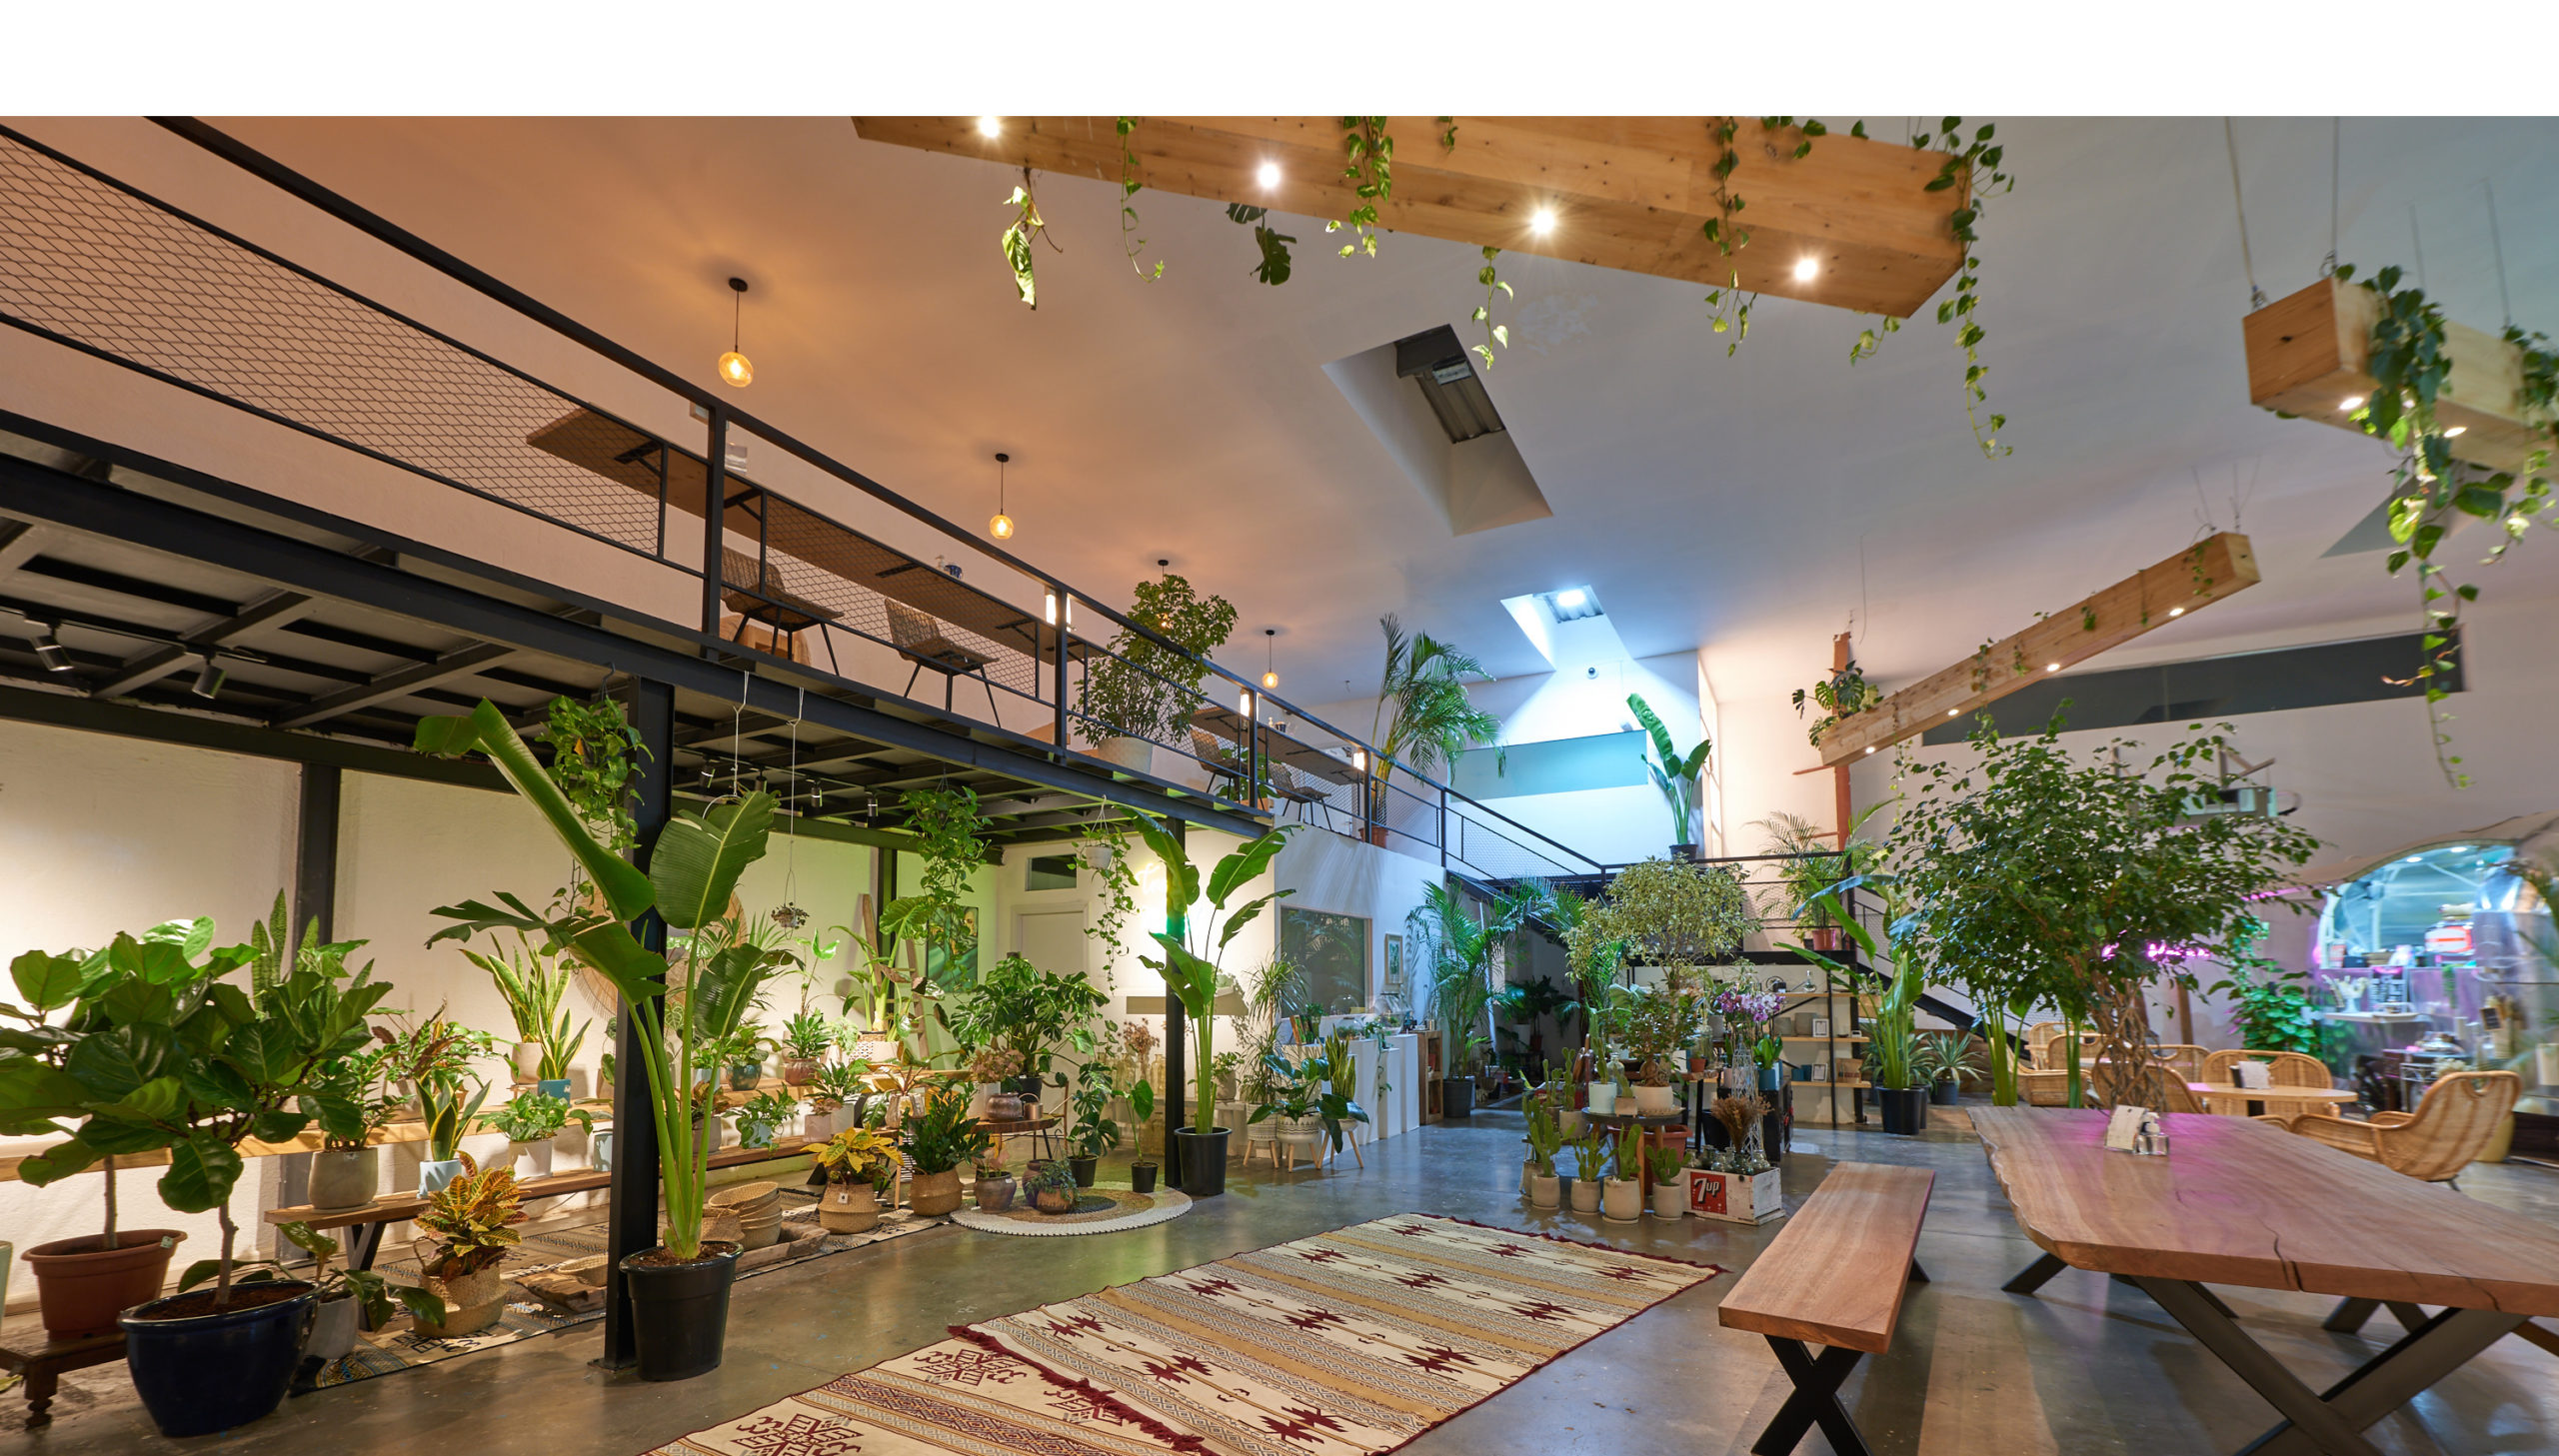 Ivy secret garden plant shop and cafe